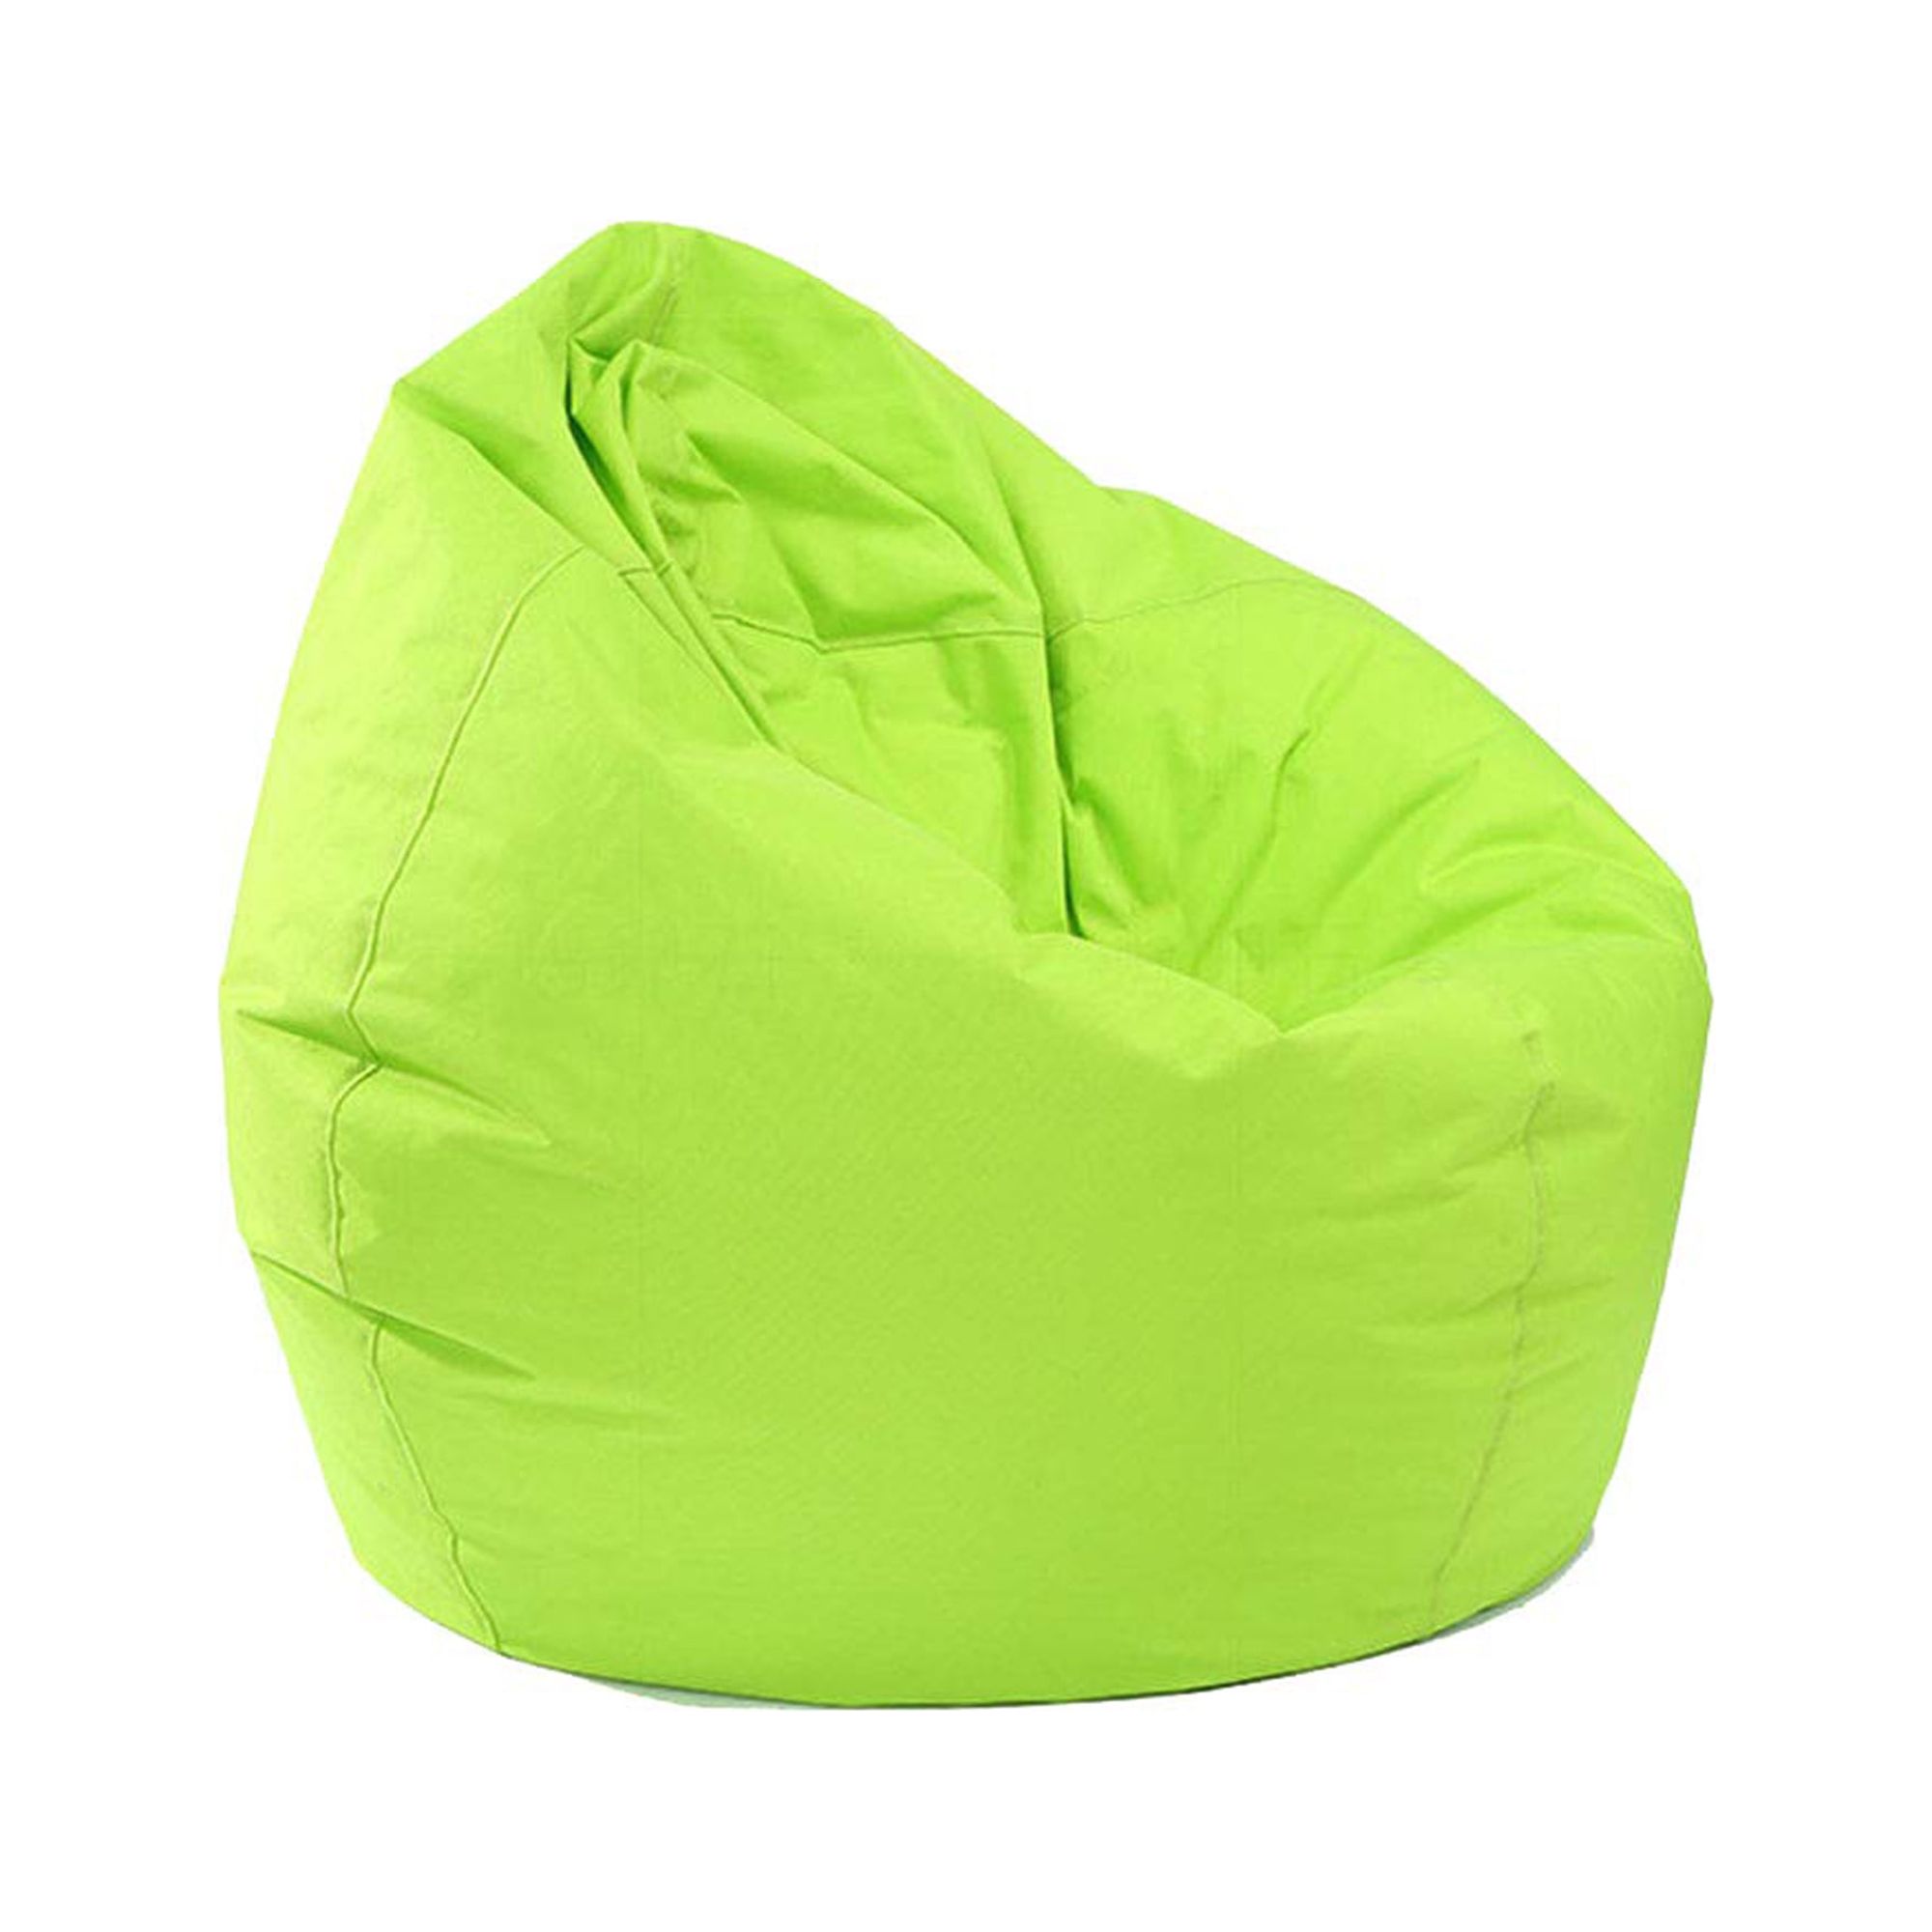 Bebiullo Large Bean Bag Gamer Beanbag Adult Outdoor Gaming Garden Big Arm Chair Seat Cover - image 1 of 5